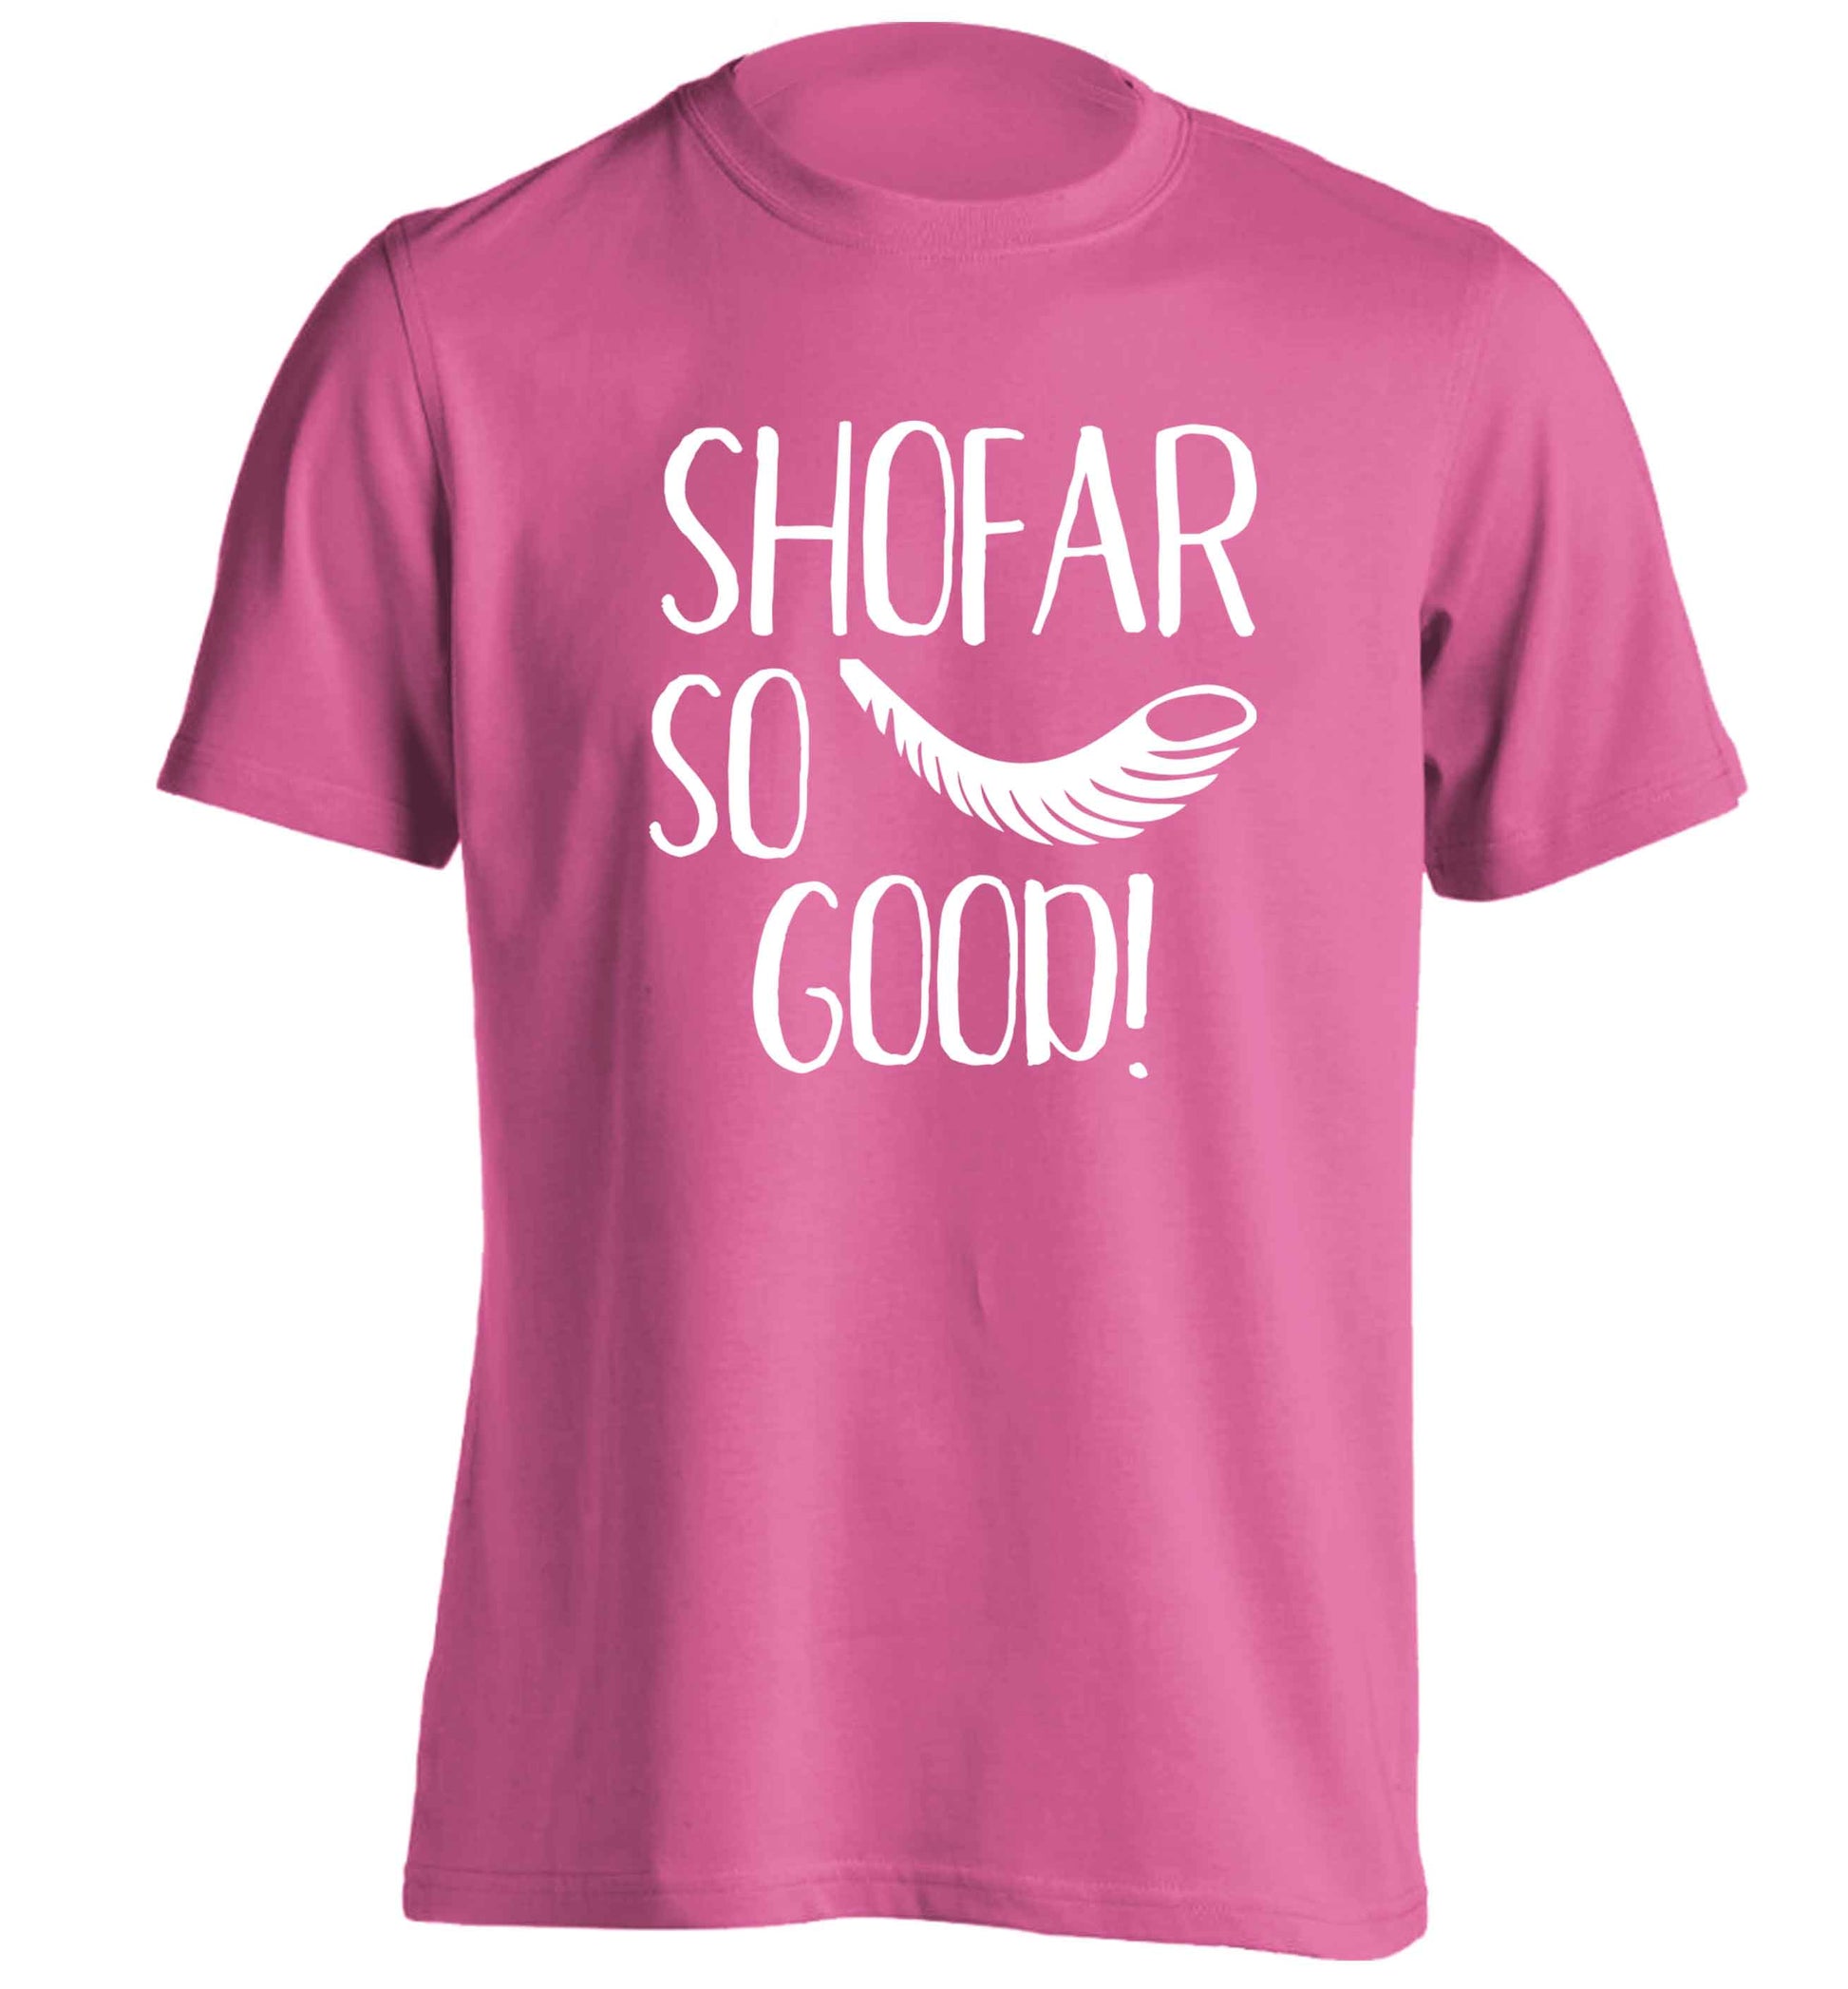 Shofar so good! adults unisex pink Tshirt 2XL